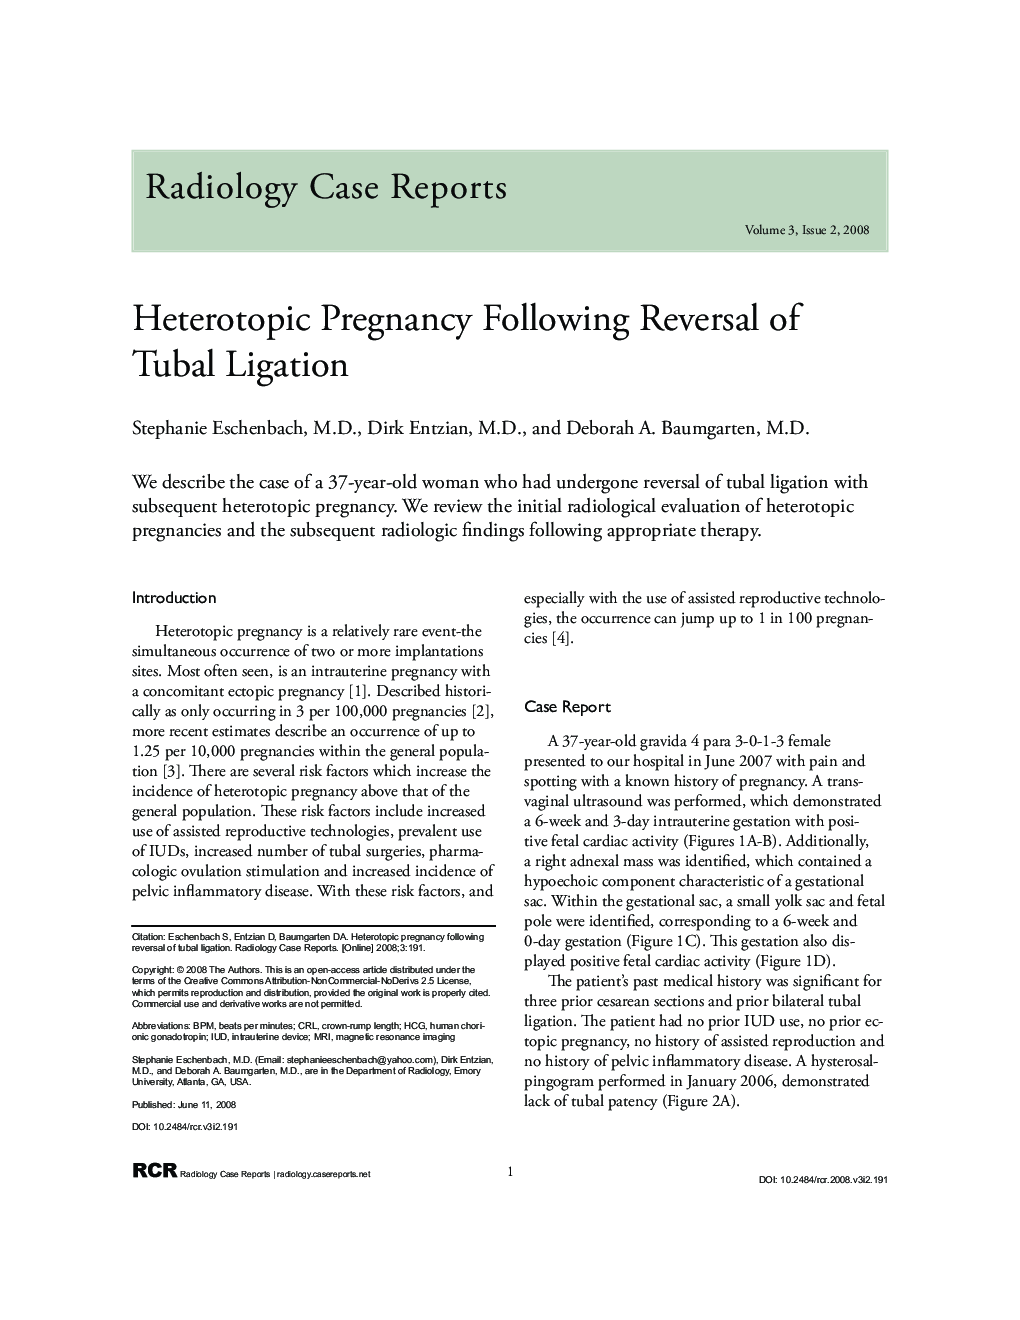 Heterotopic Pregnancy Following Reversal of Tubal Ligation